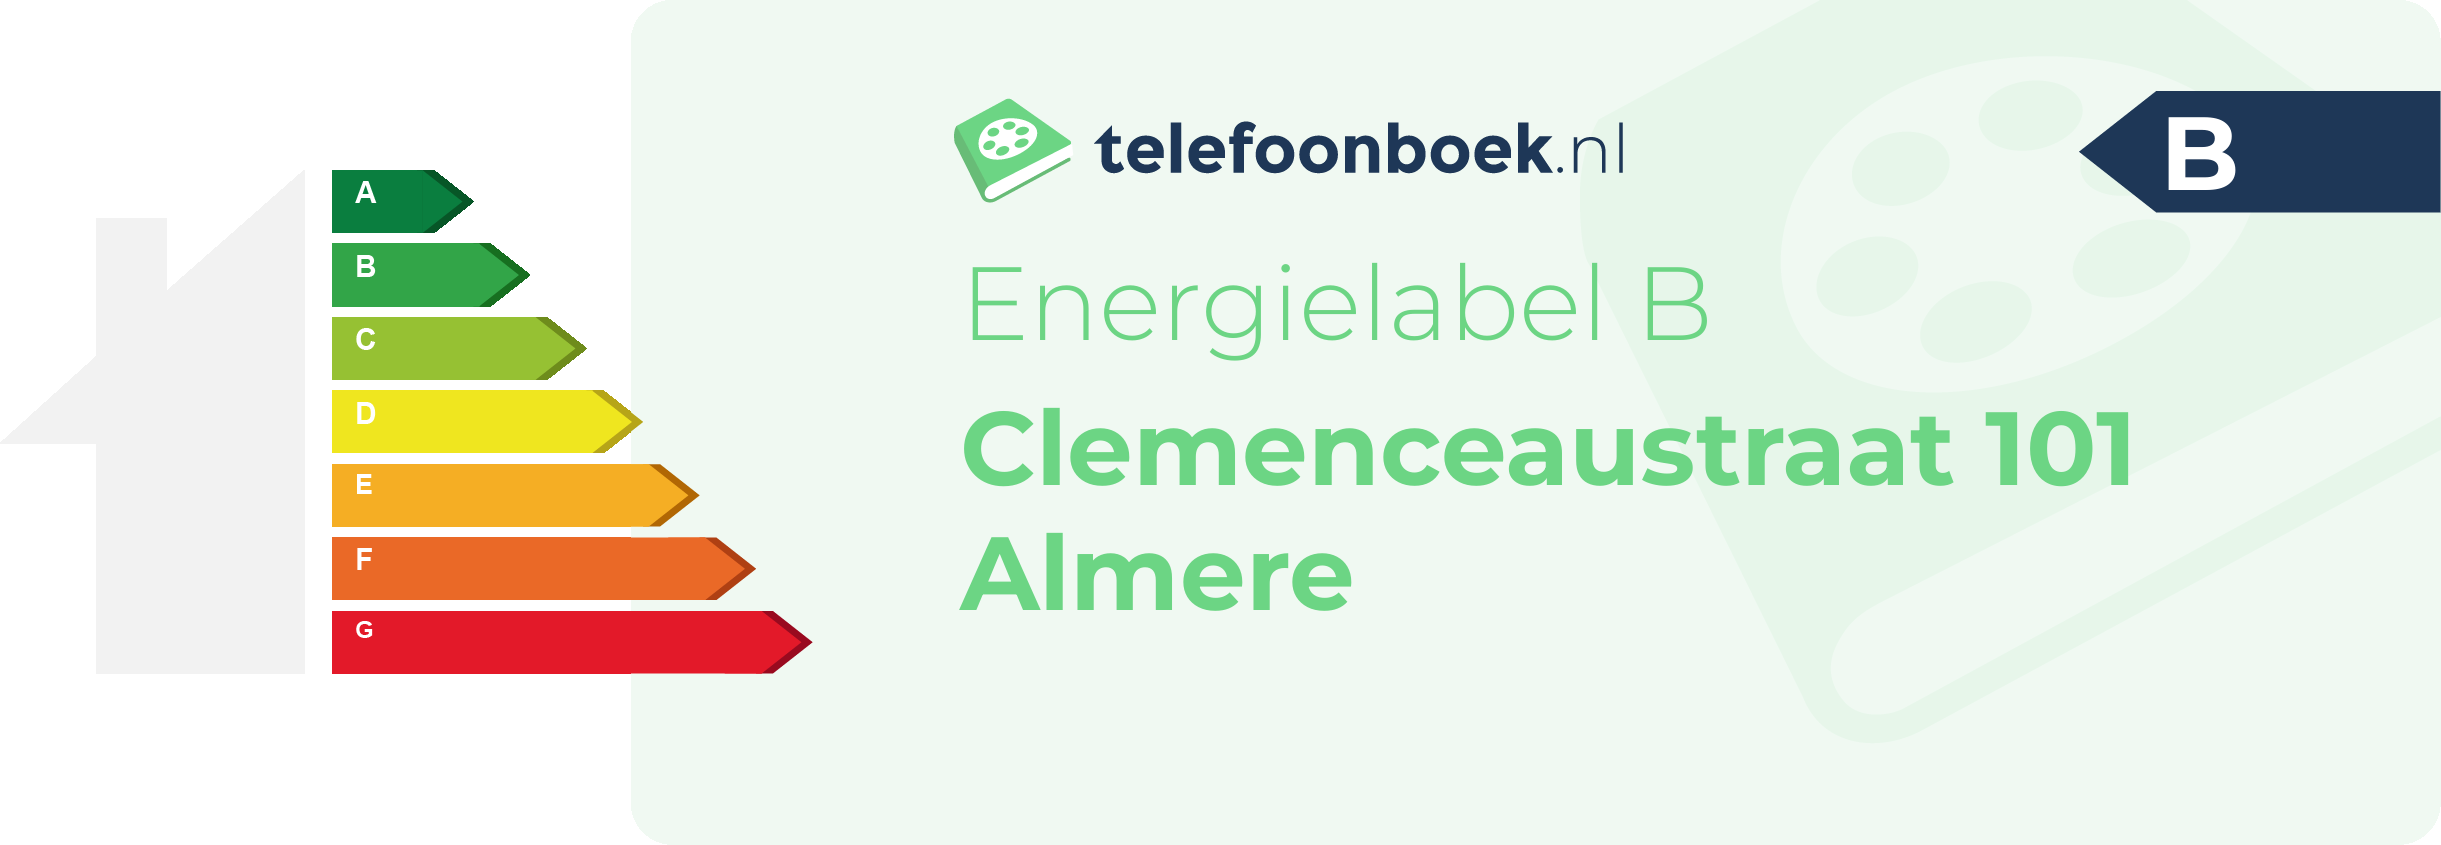 Energielabel Clemenceaustraat 101 Almere